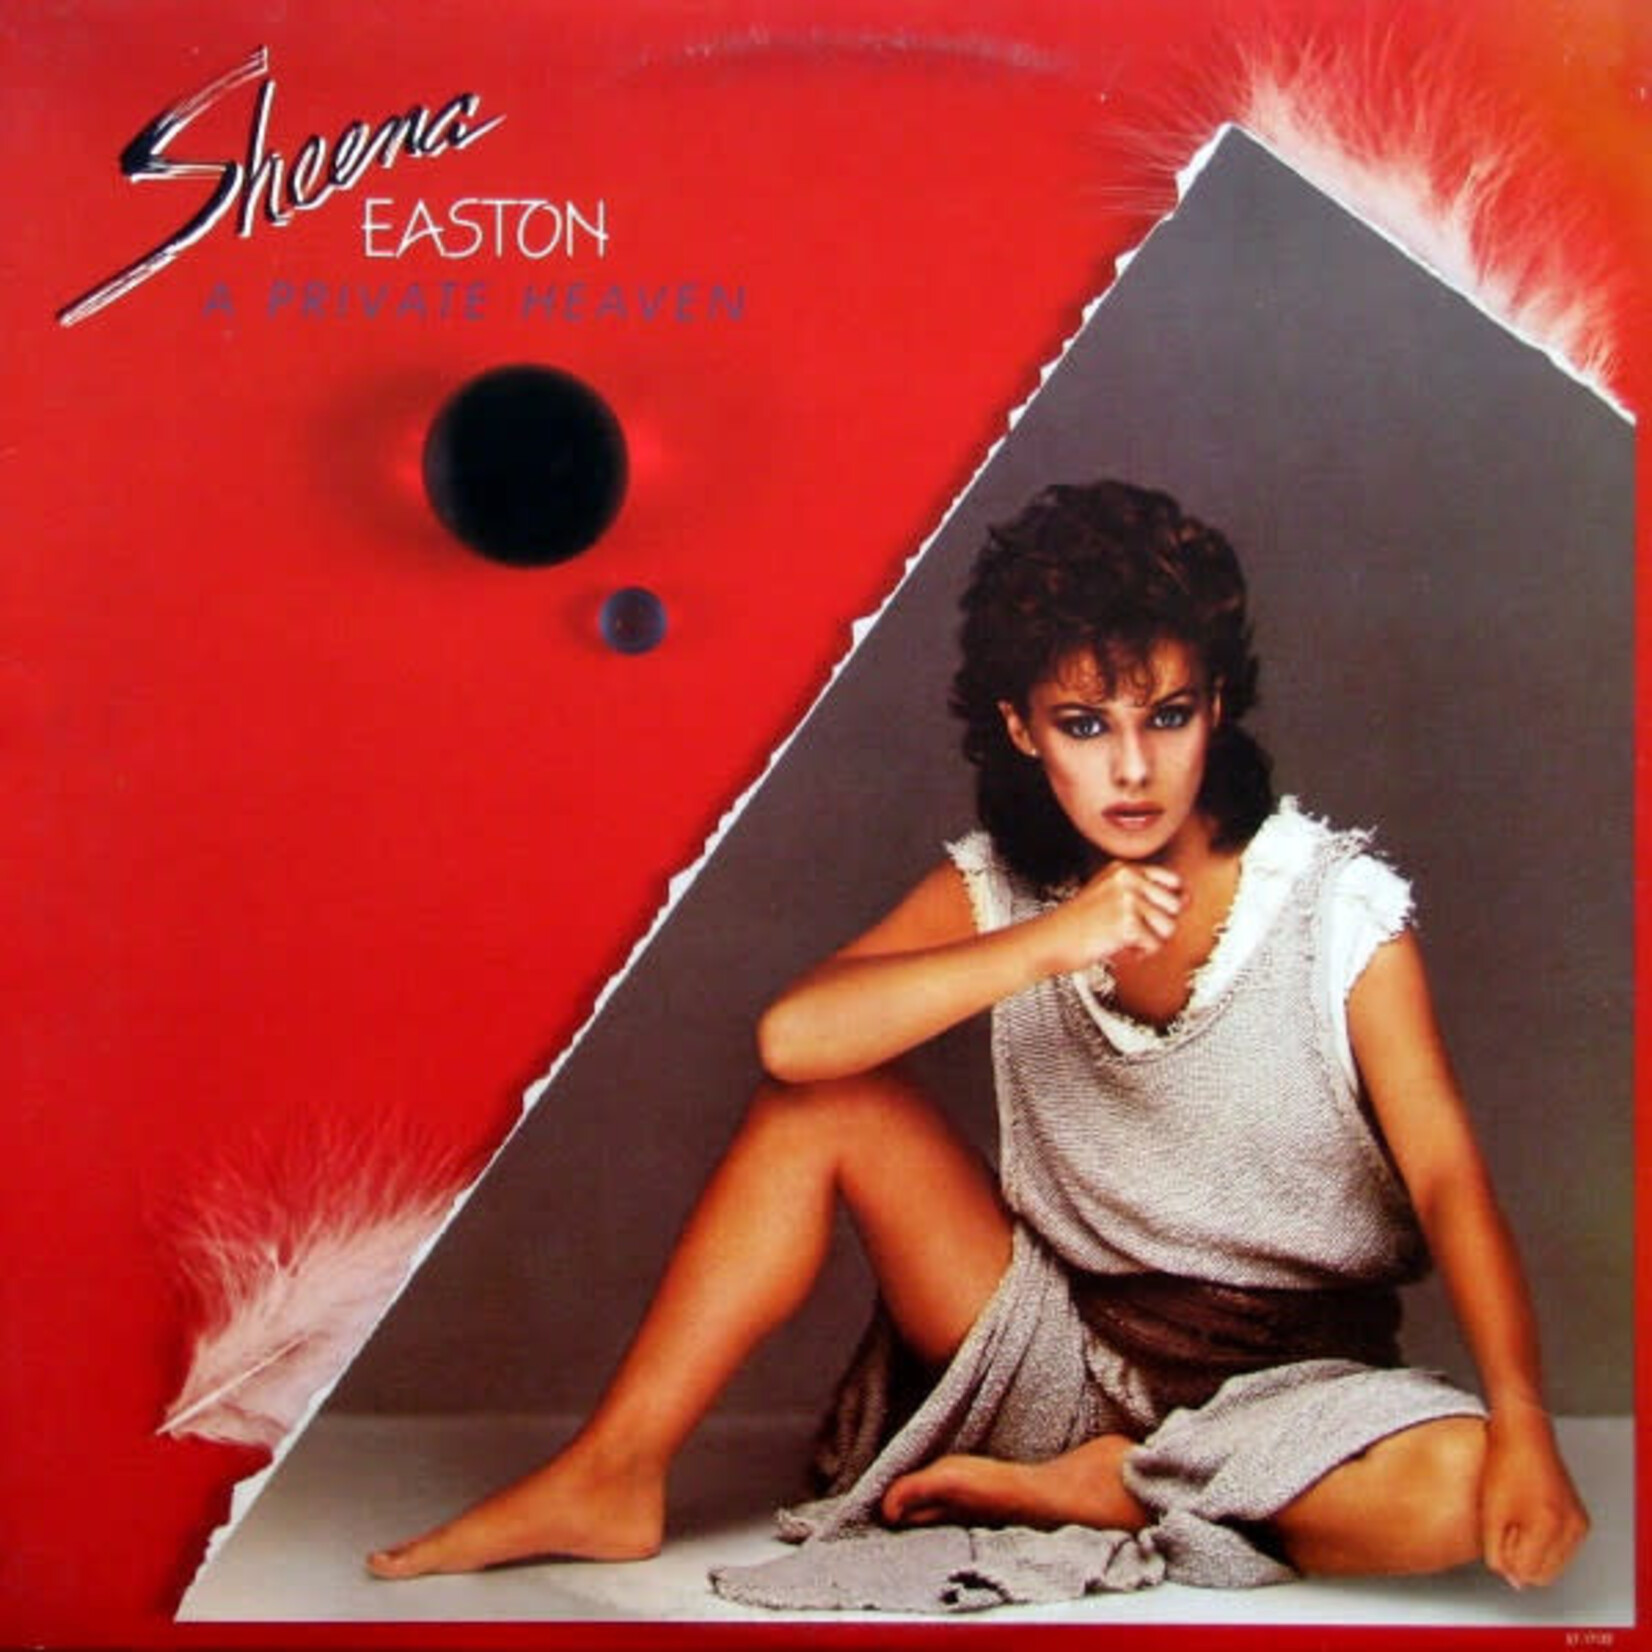 Sheena Easton Sheena Easton – A Private Heaven (VG, 1984, LP, EMI America – ST-17132)